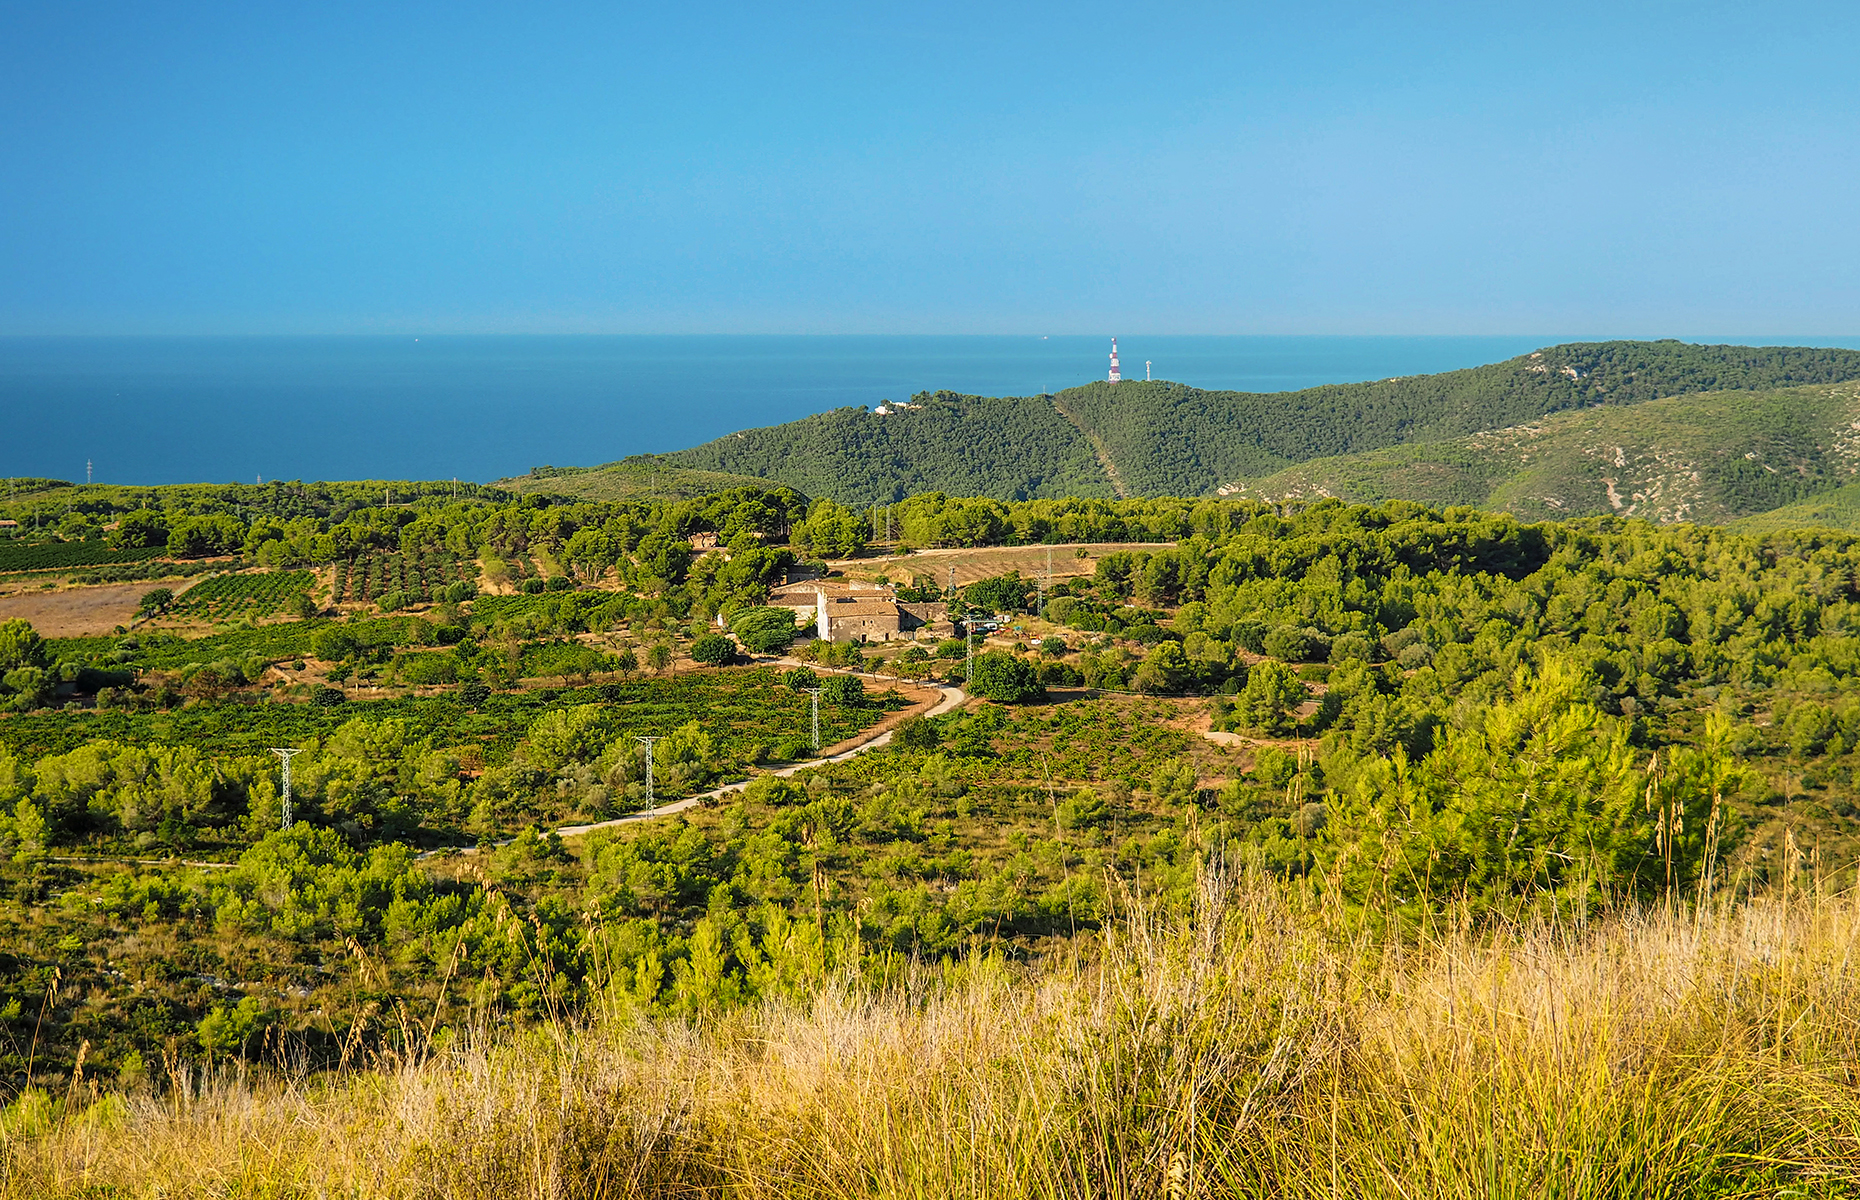 Garruf Natural Park, Spain. (Image: Siro_Rodenas/Shutterstock)